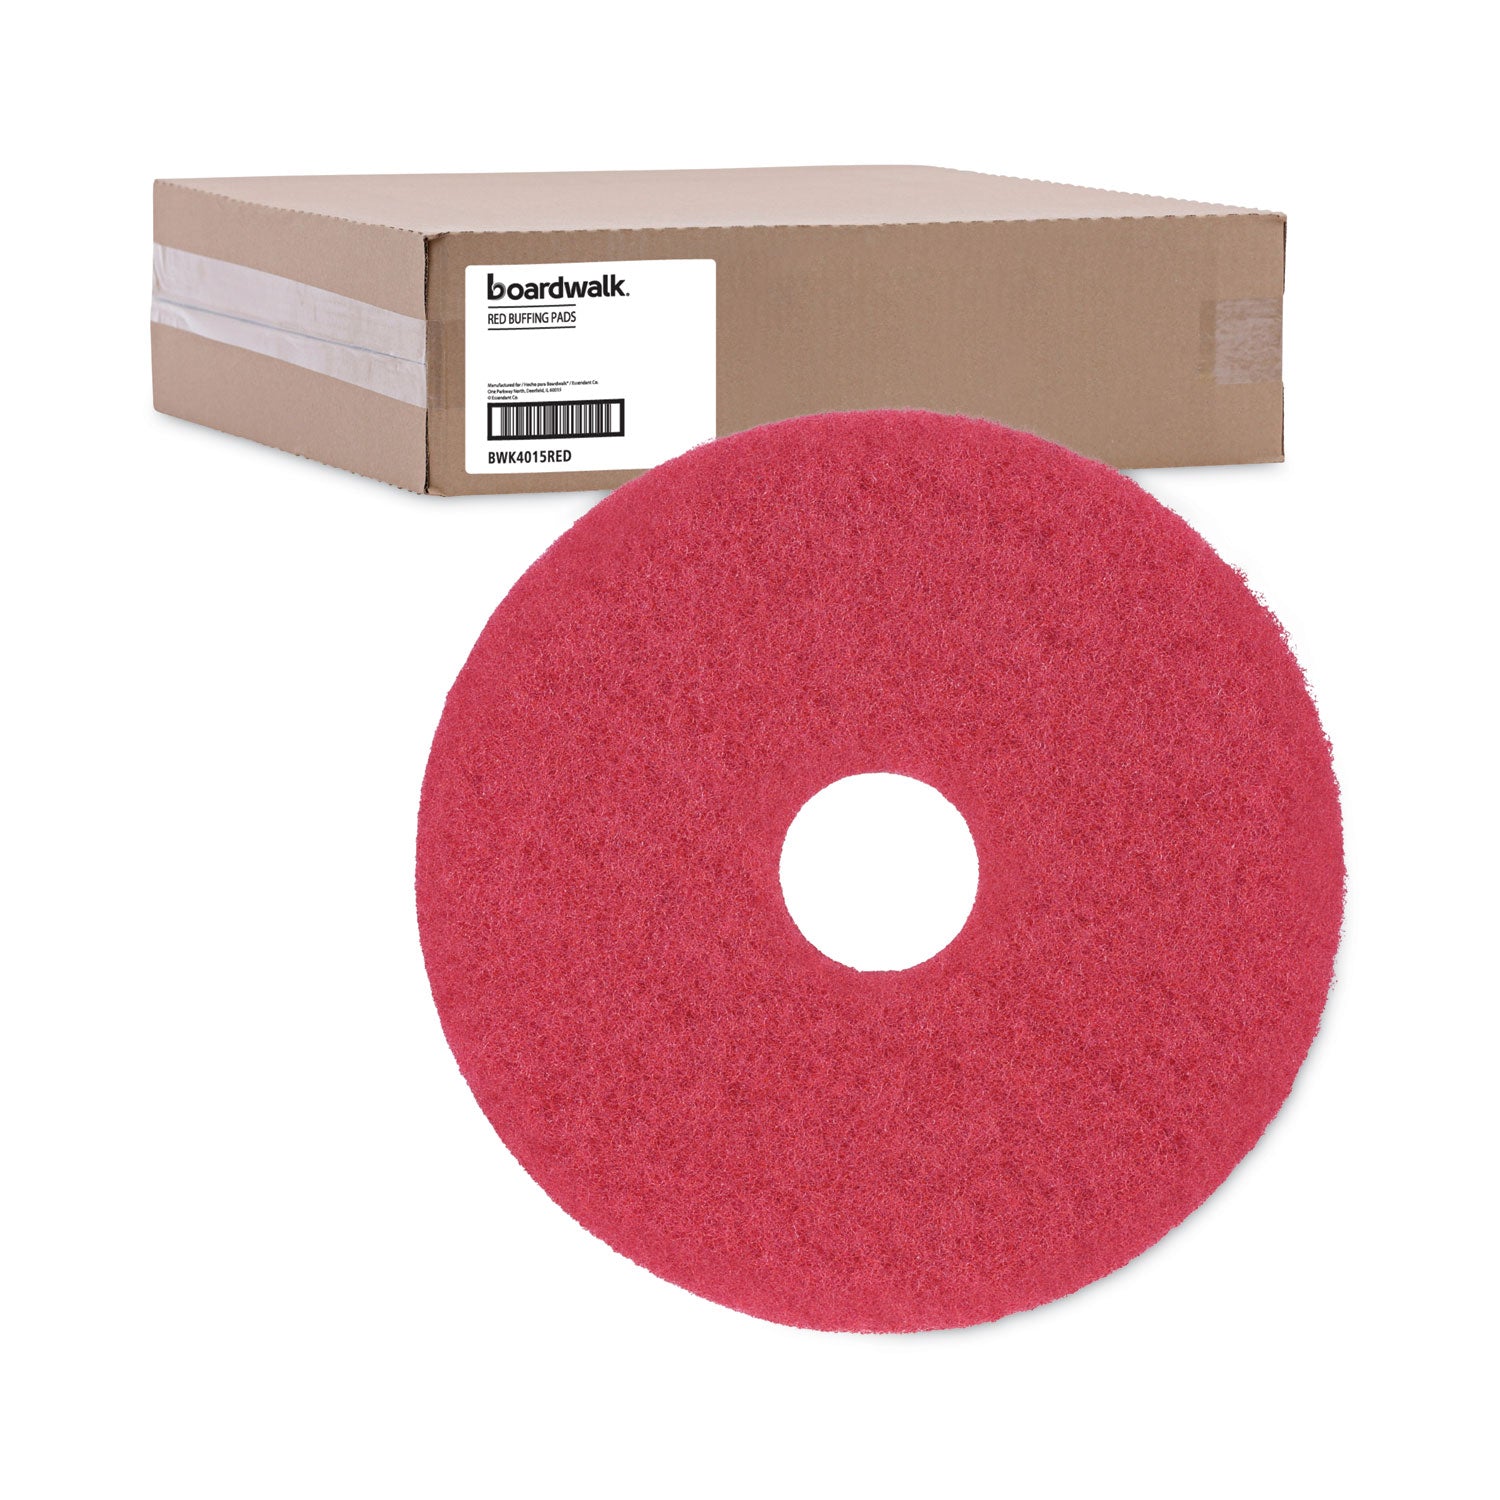 buffing-floor-pads-15-diameter-red-5-carton_bwk4015red - 5